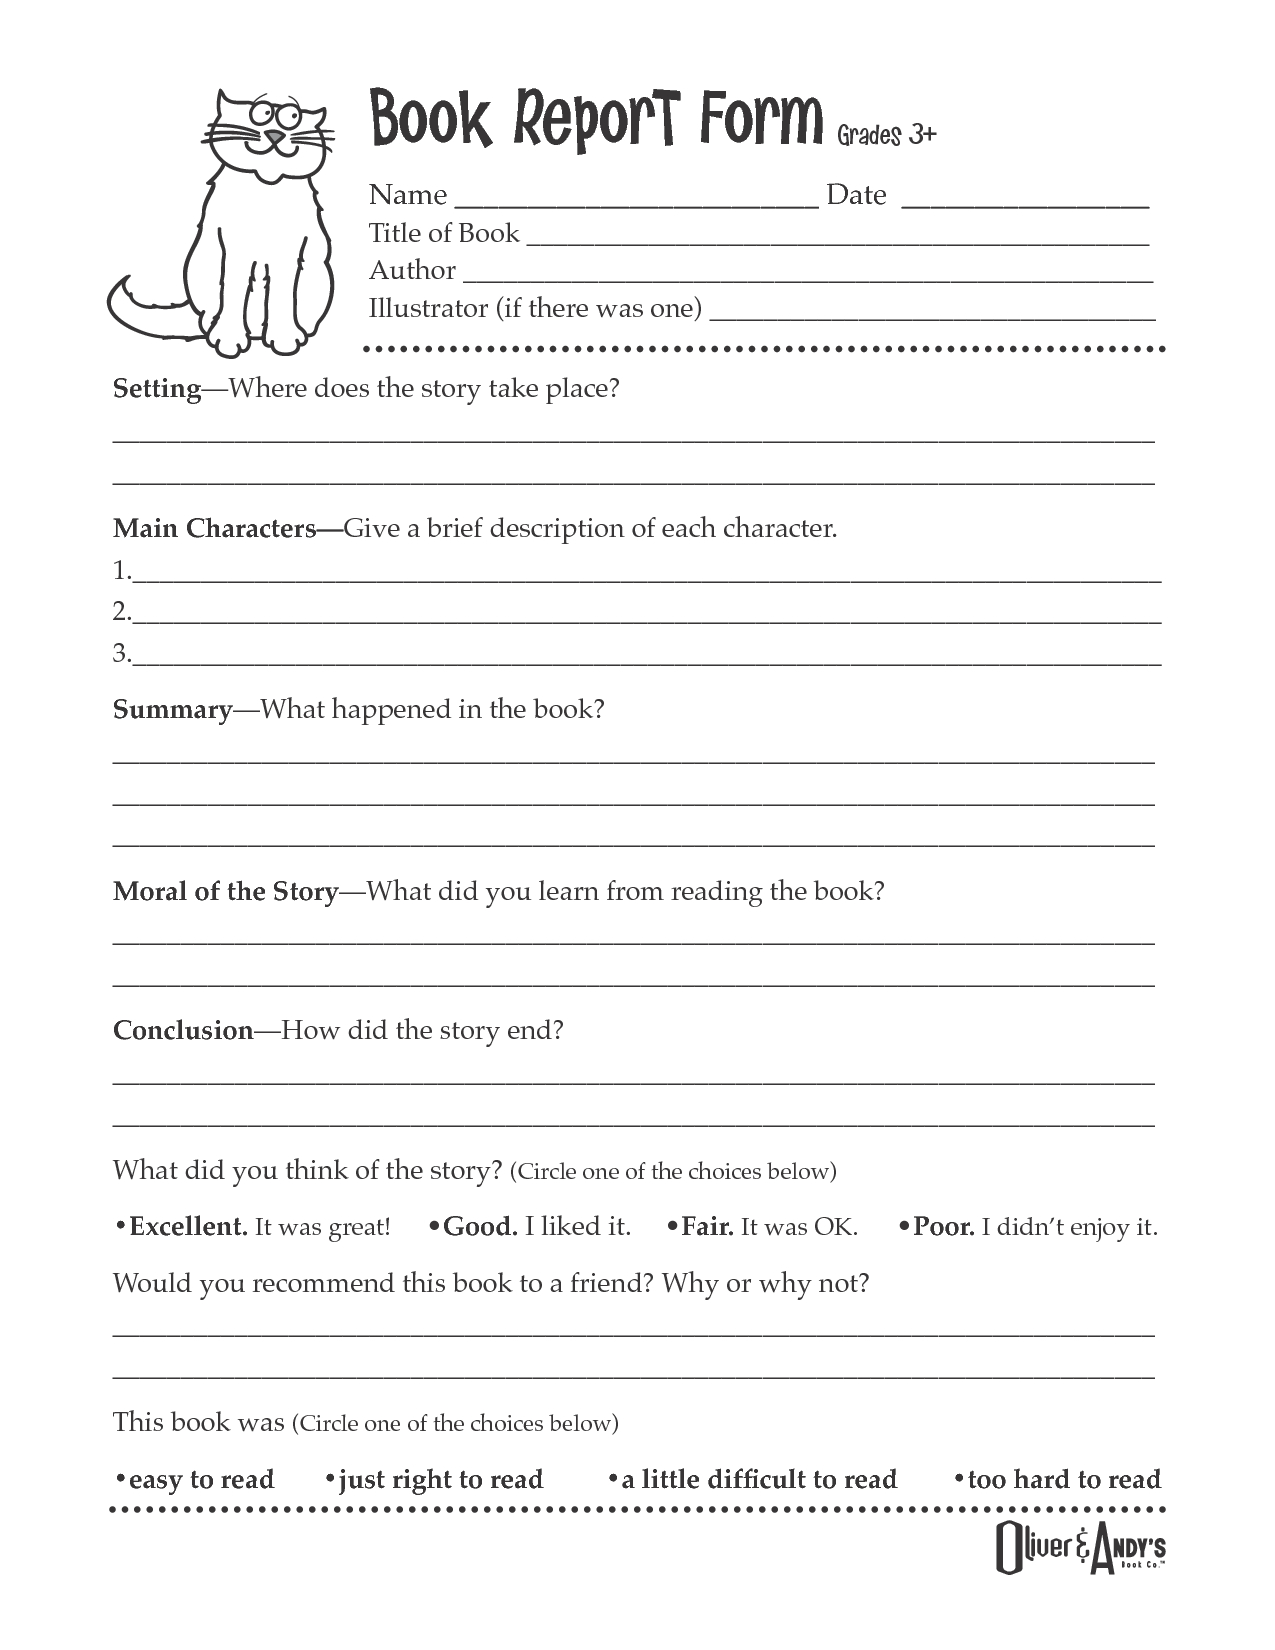 Second Grade Book Report Template | Book Report Form Grades Throughout 4Th Grade Book Report Template